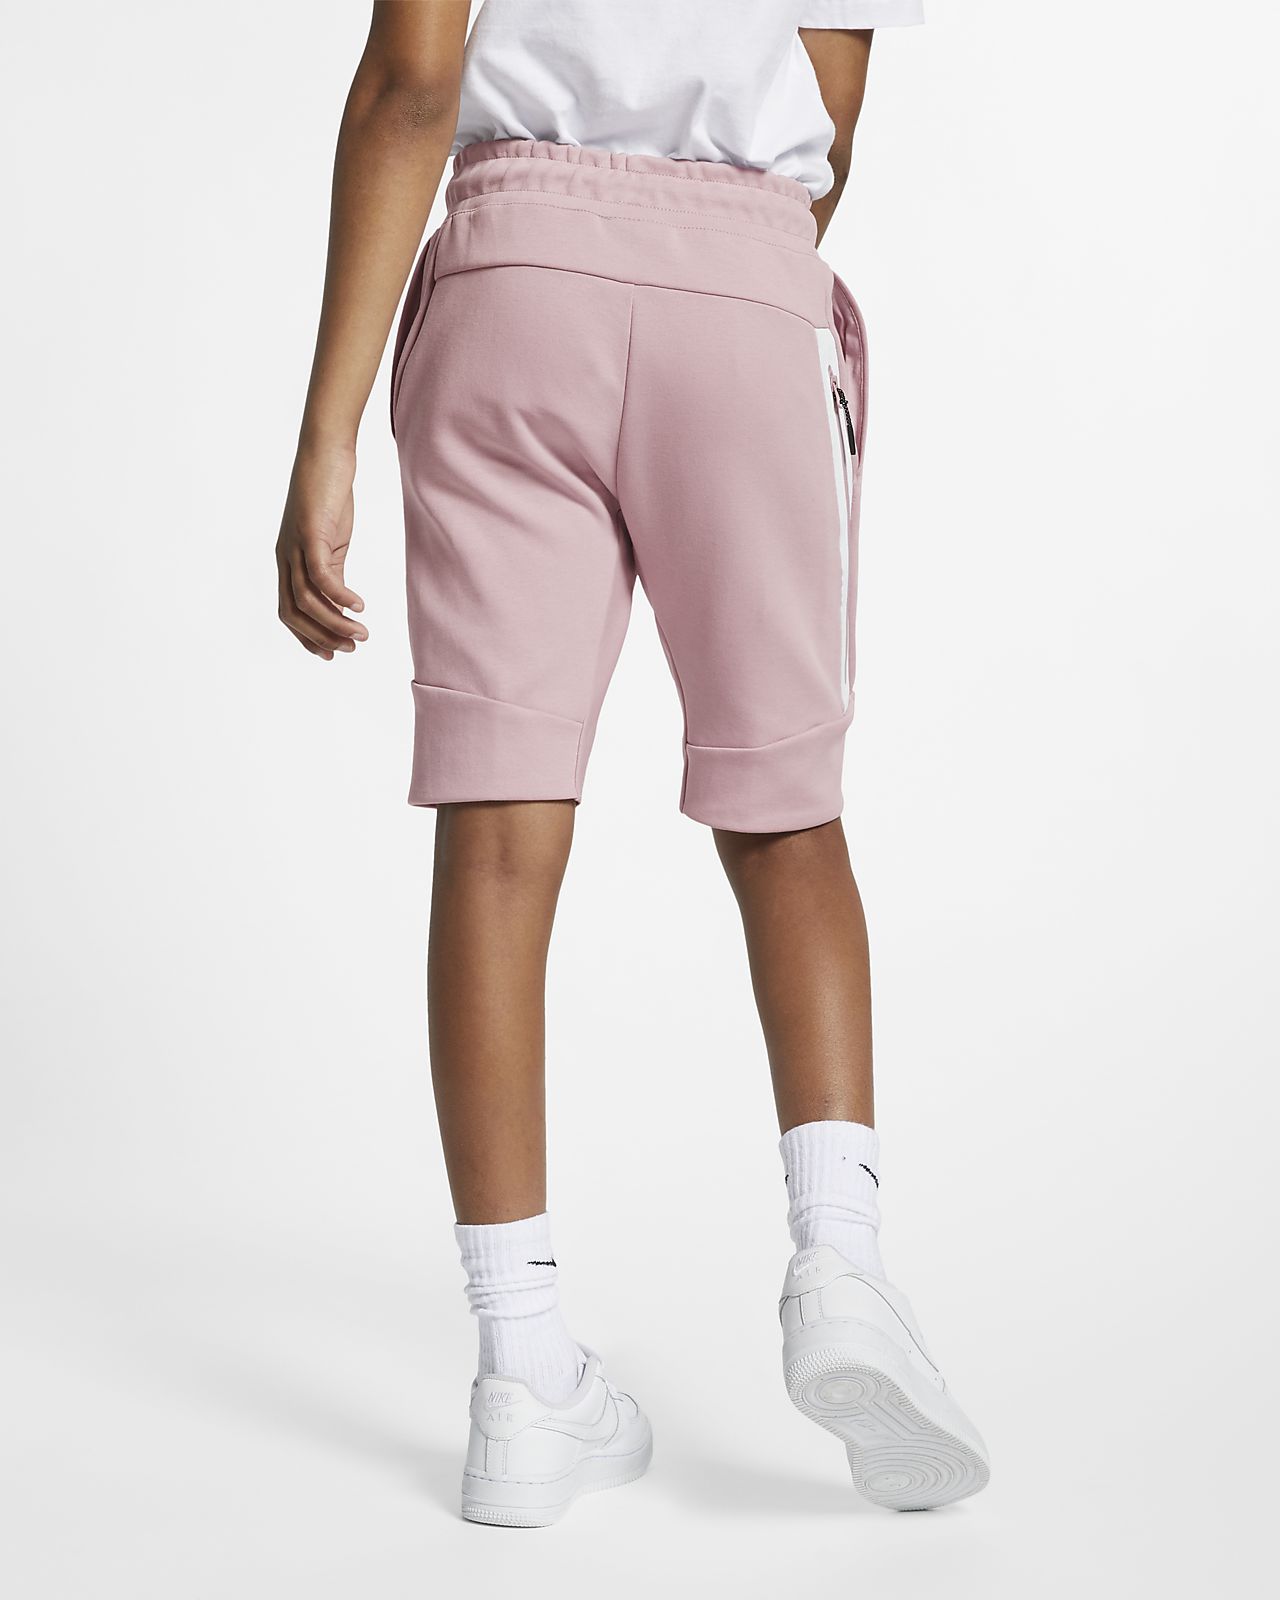 nike tech shorts pink promo code for 